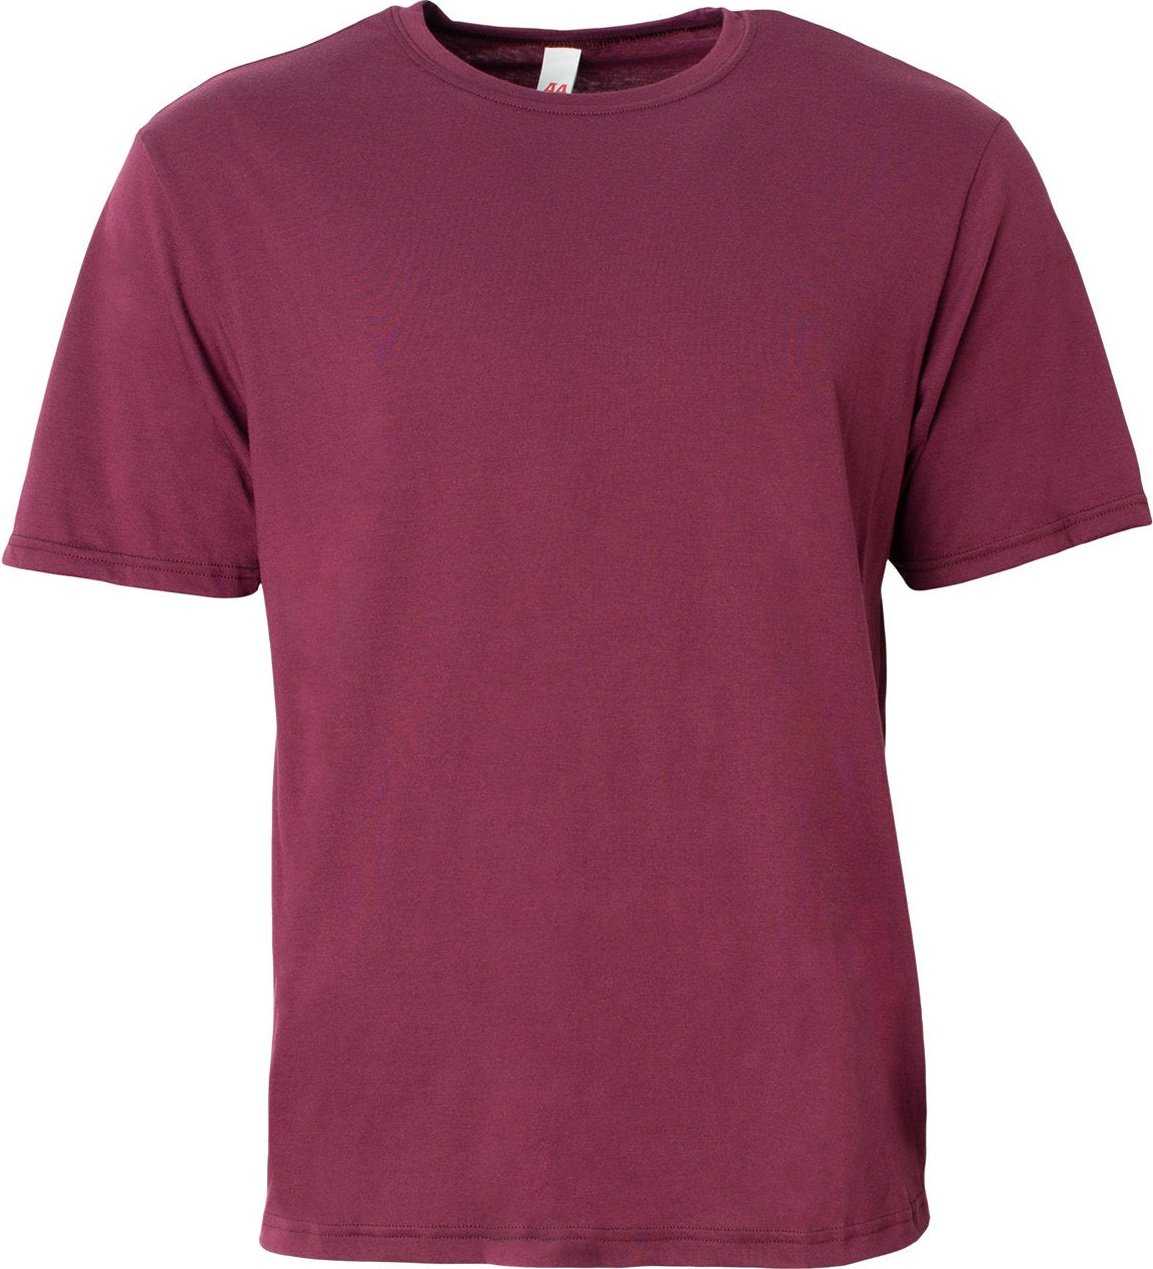 A4 N3013 Adult Softek T-Shirt - MAROON - HIT a Double - 1